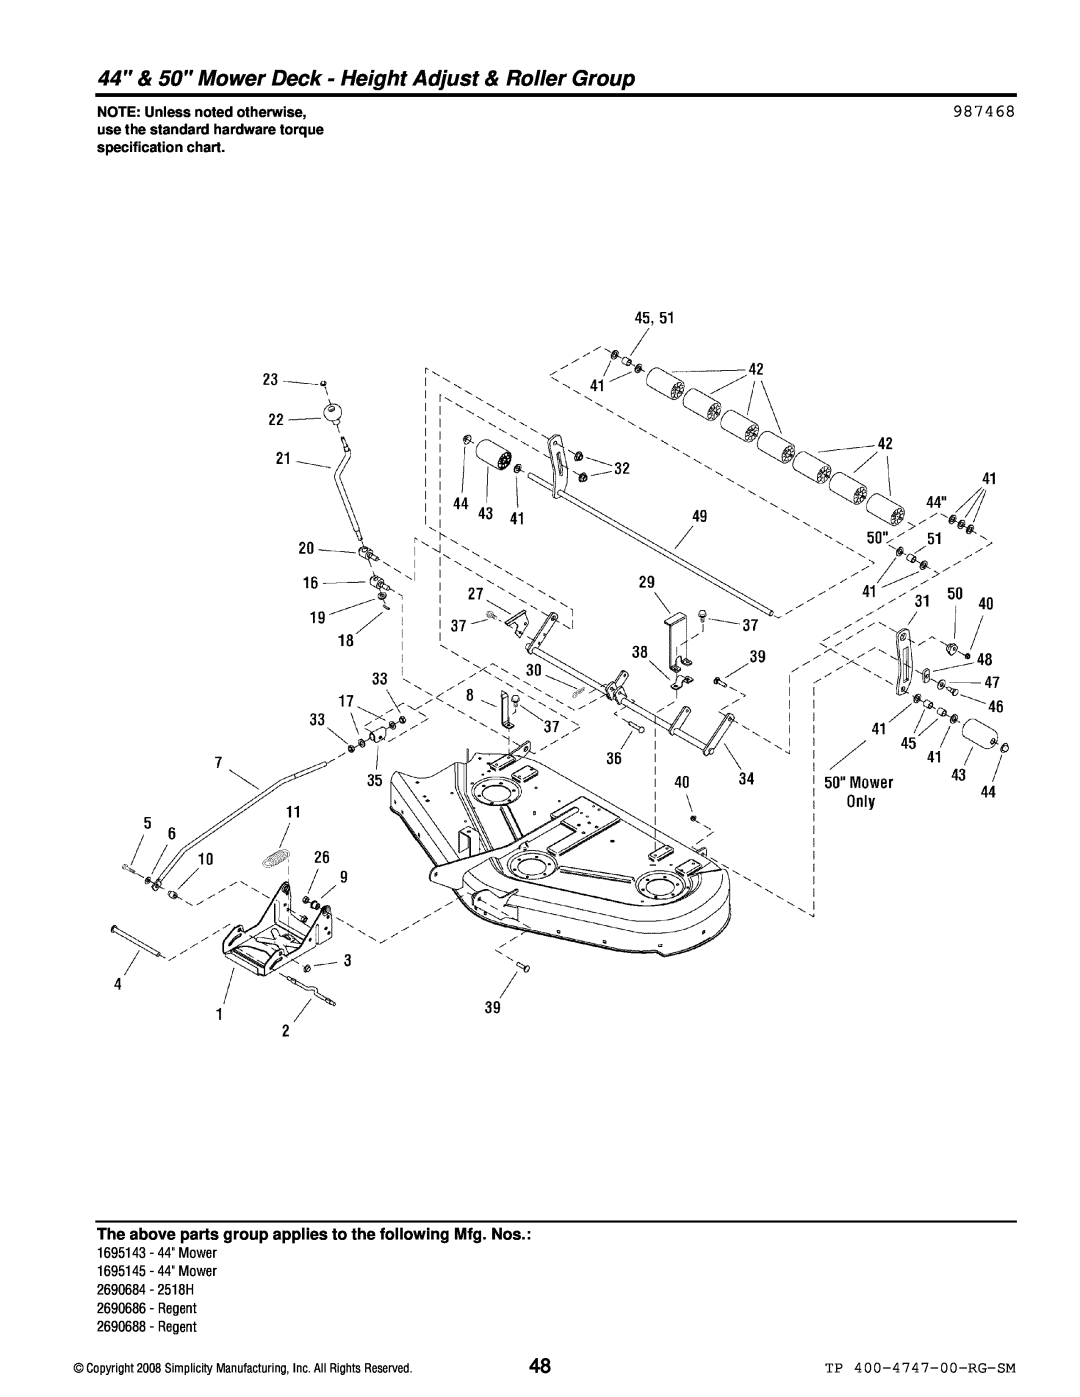 Simplicity Regent / 2500 manual 44 & 50 Mower Deck - Height Adjust & Roller Group, 987468, TP 400-4747-00-RG-SM 